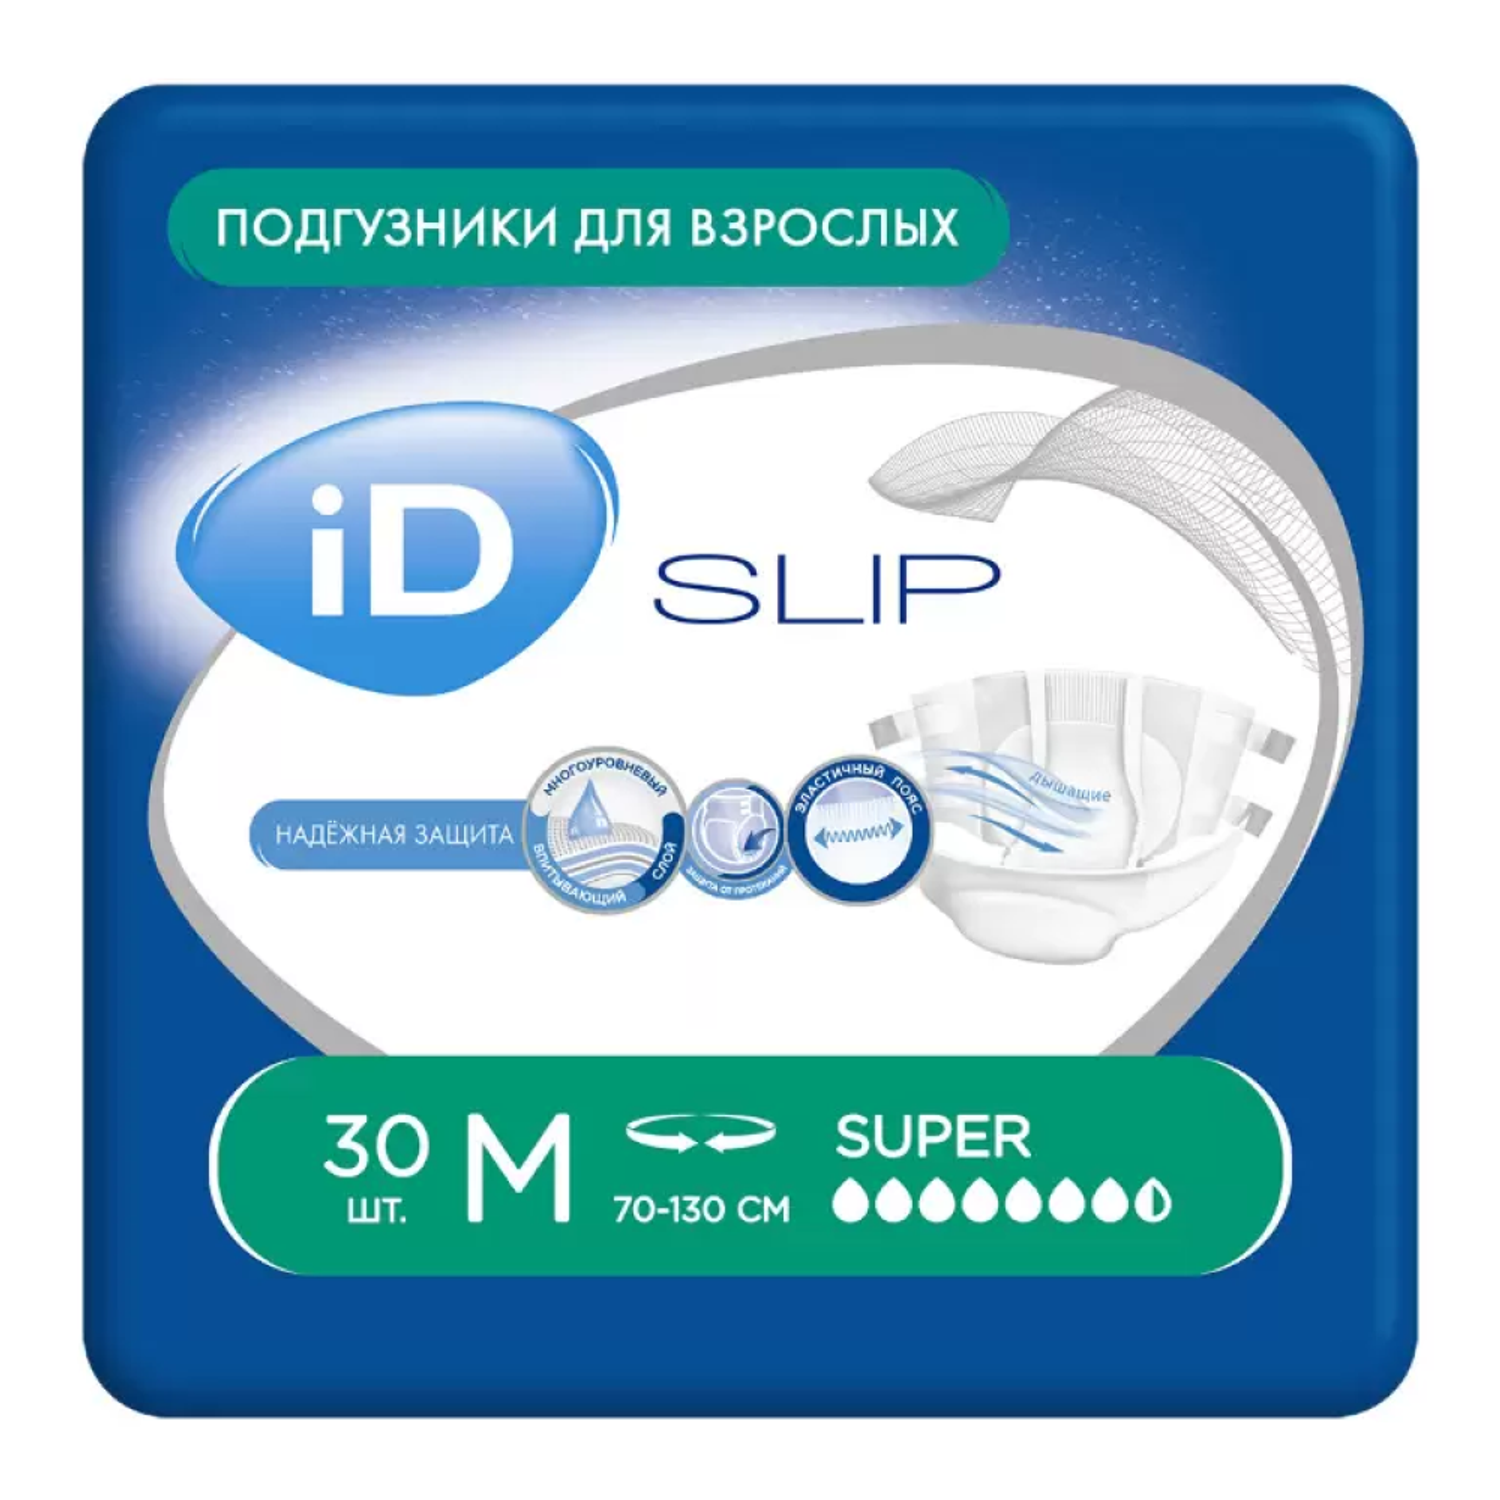 Подгузники для взрослых iD Slip M 30 шт - фото 1